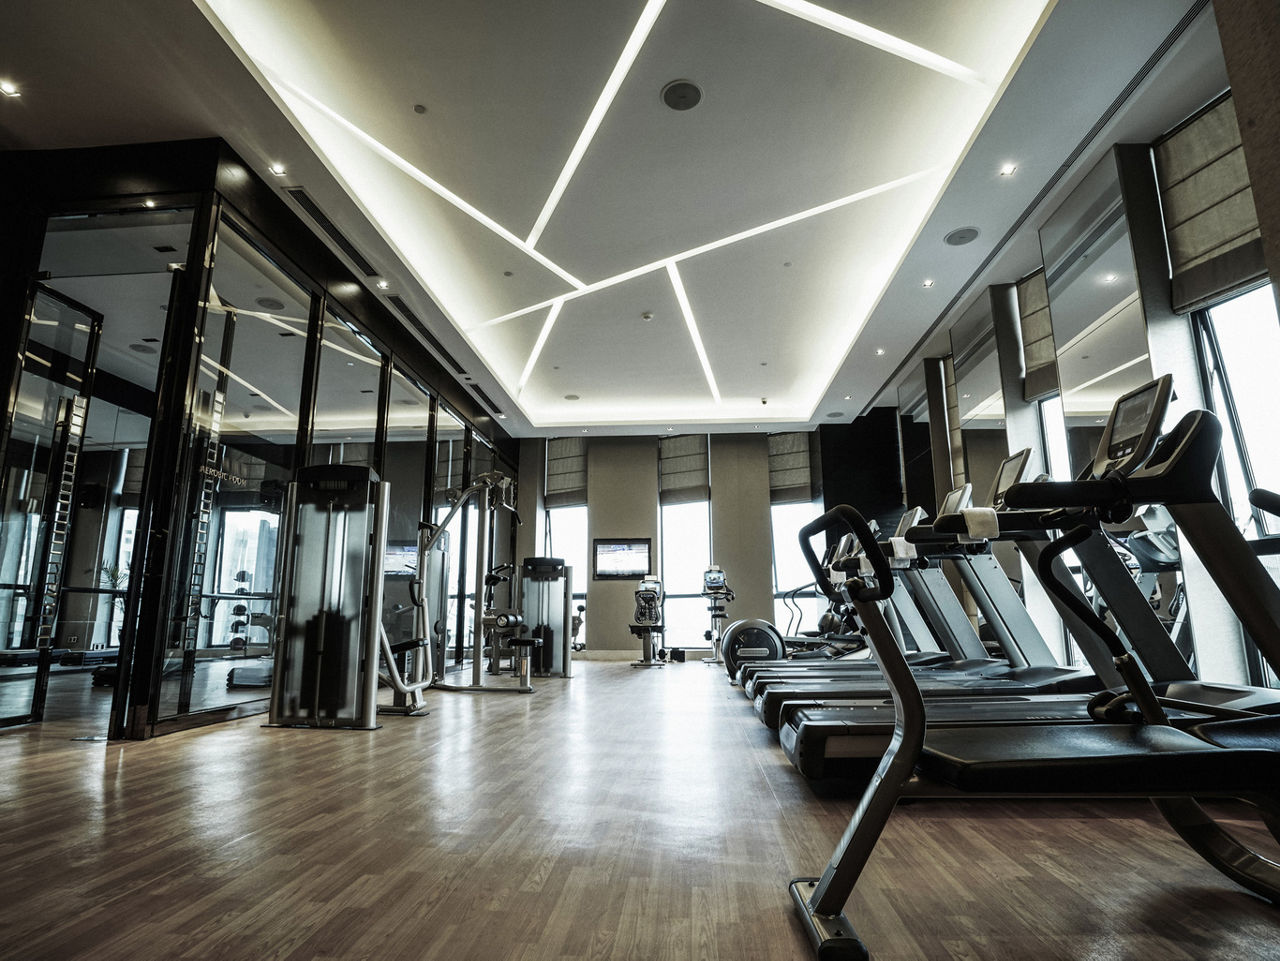 Indoor fitness center with cardio equipment and wood flooring | Blog | Greystar 